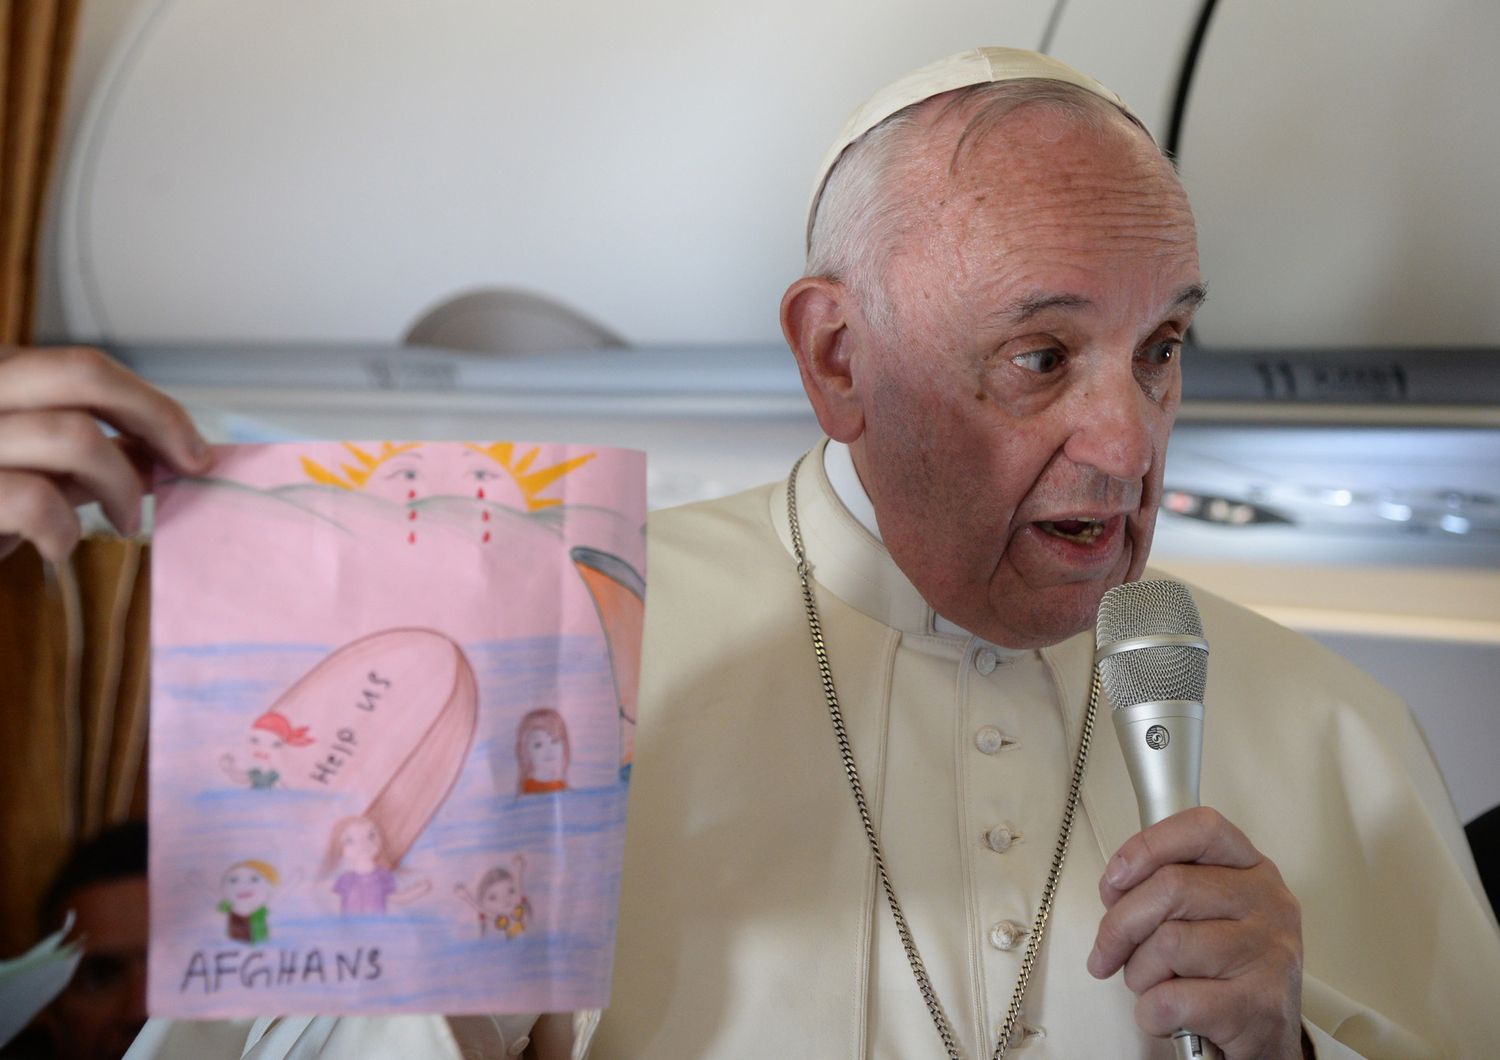 papa francesco disegno bimbi immigrati Lesbo sole che piange bambini (Afp)&nbsp;